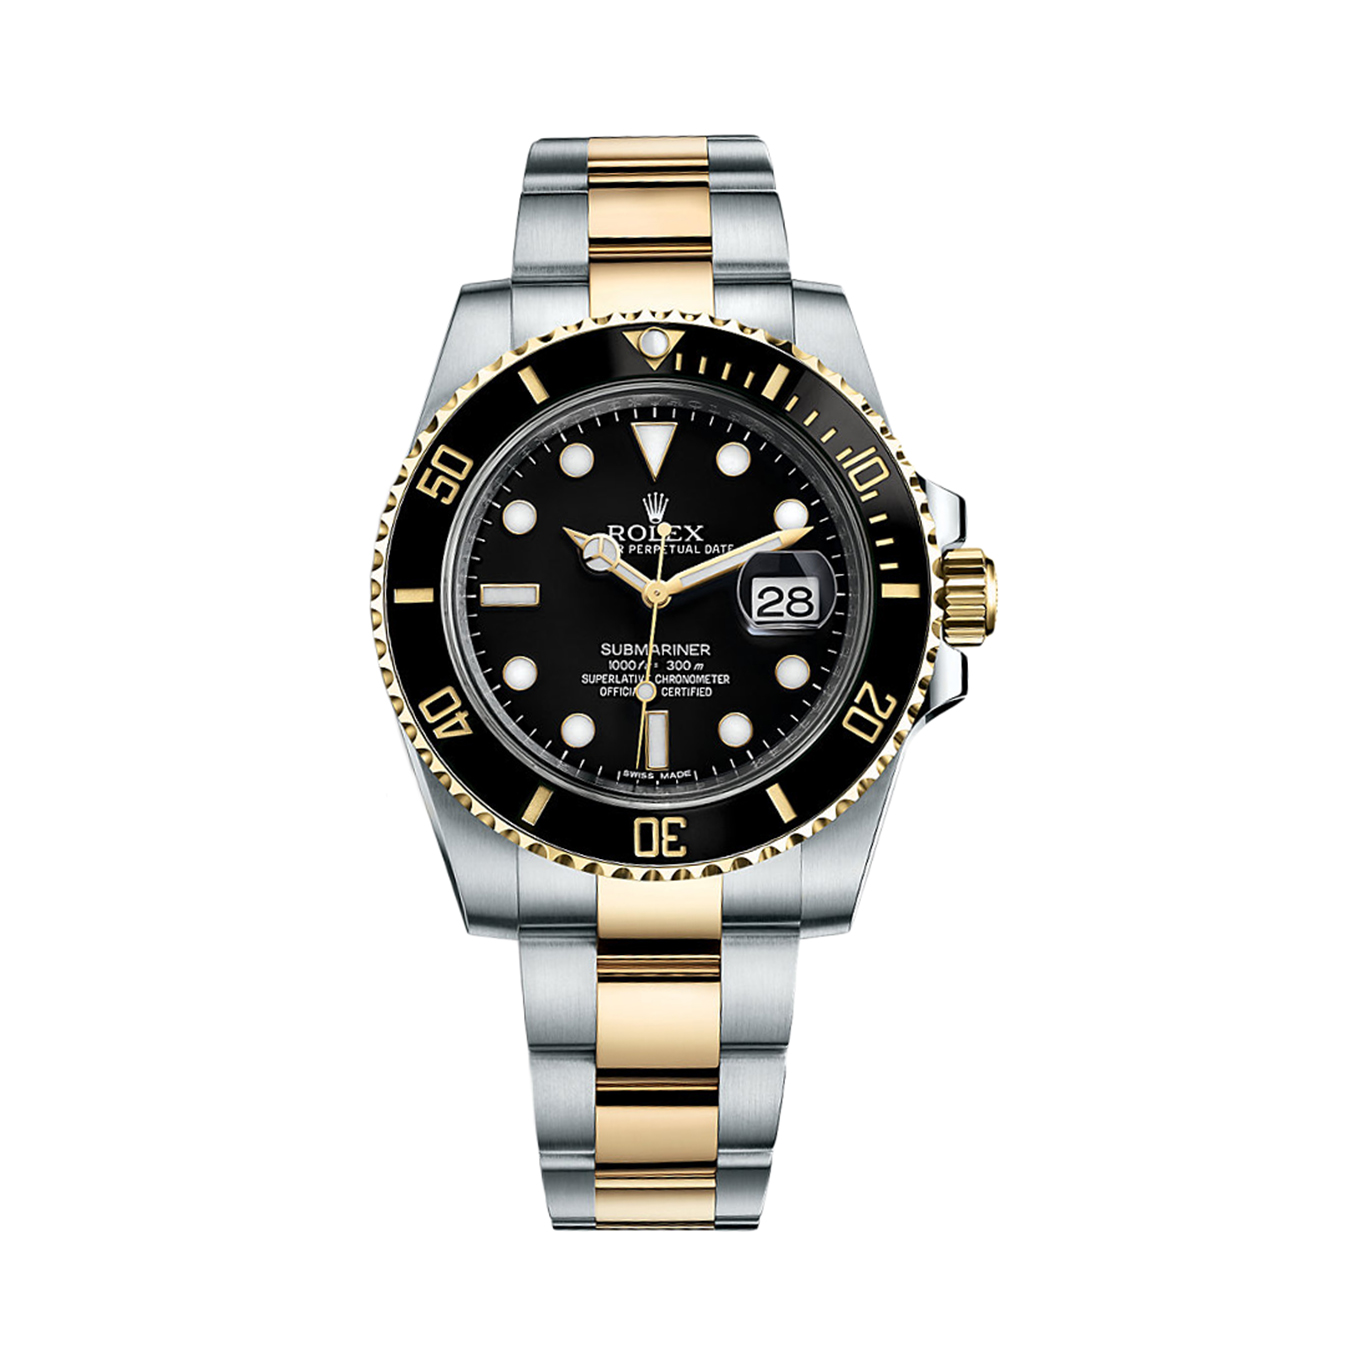 Submariner 116613LN Gold & Stainless Steel Watch (Black)